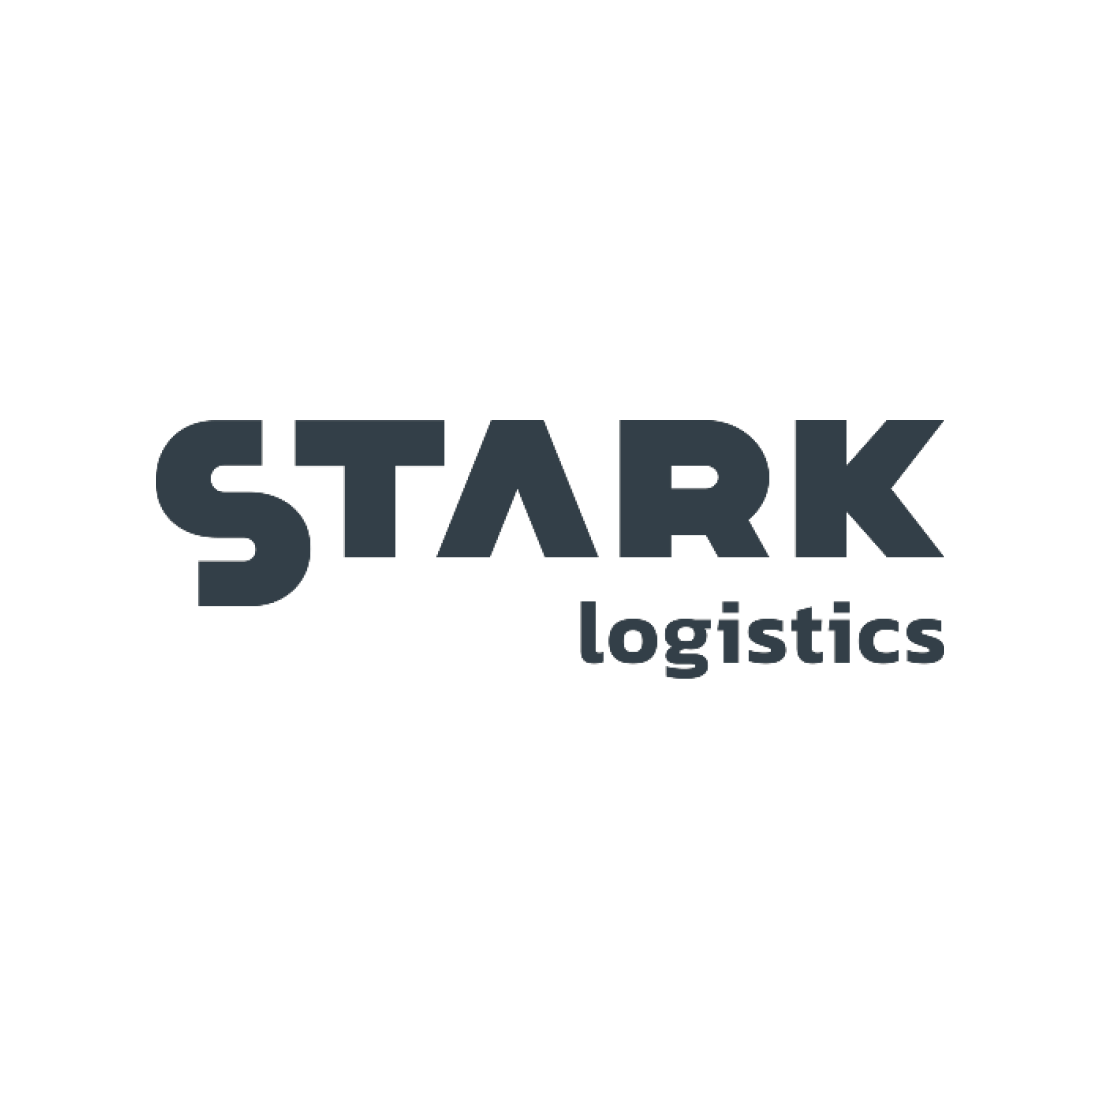 Stark Logistics